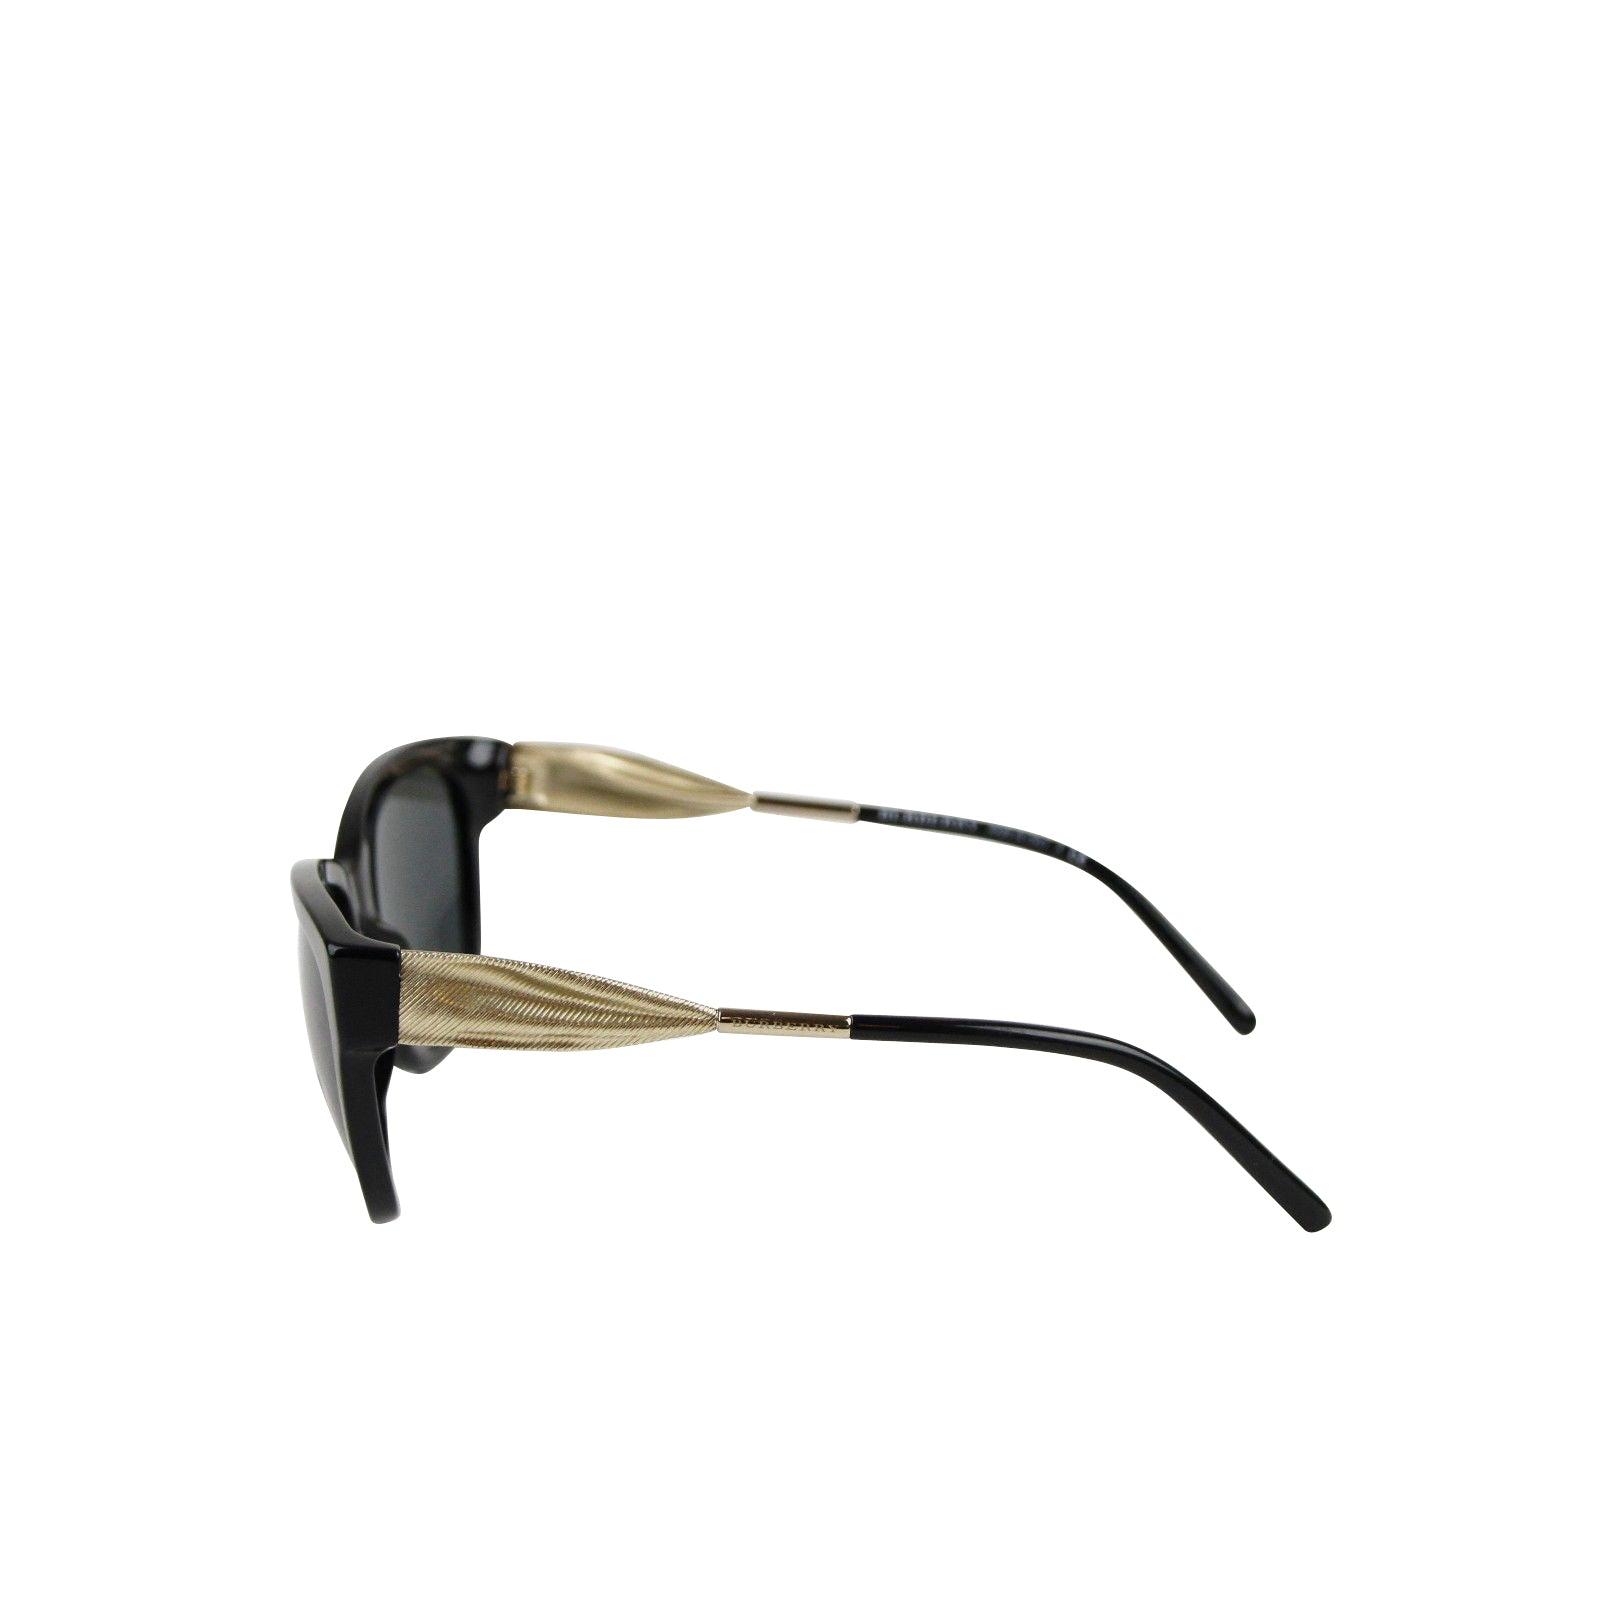 Burberry S Golden Accent Plastic Cat Eye Sunglasses 4203 3001 in Black |  Lyst